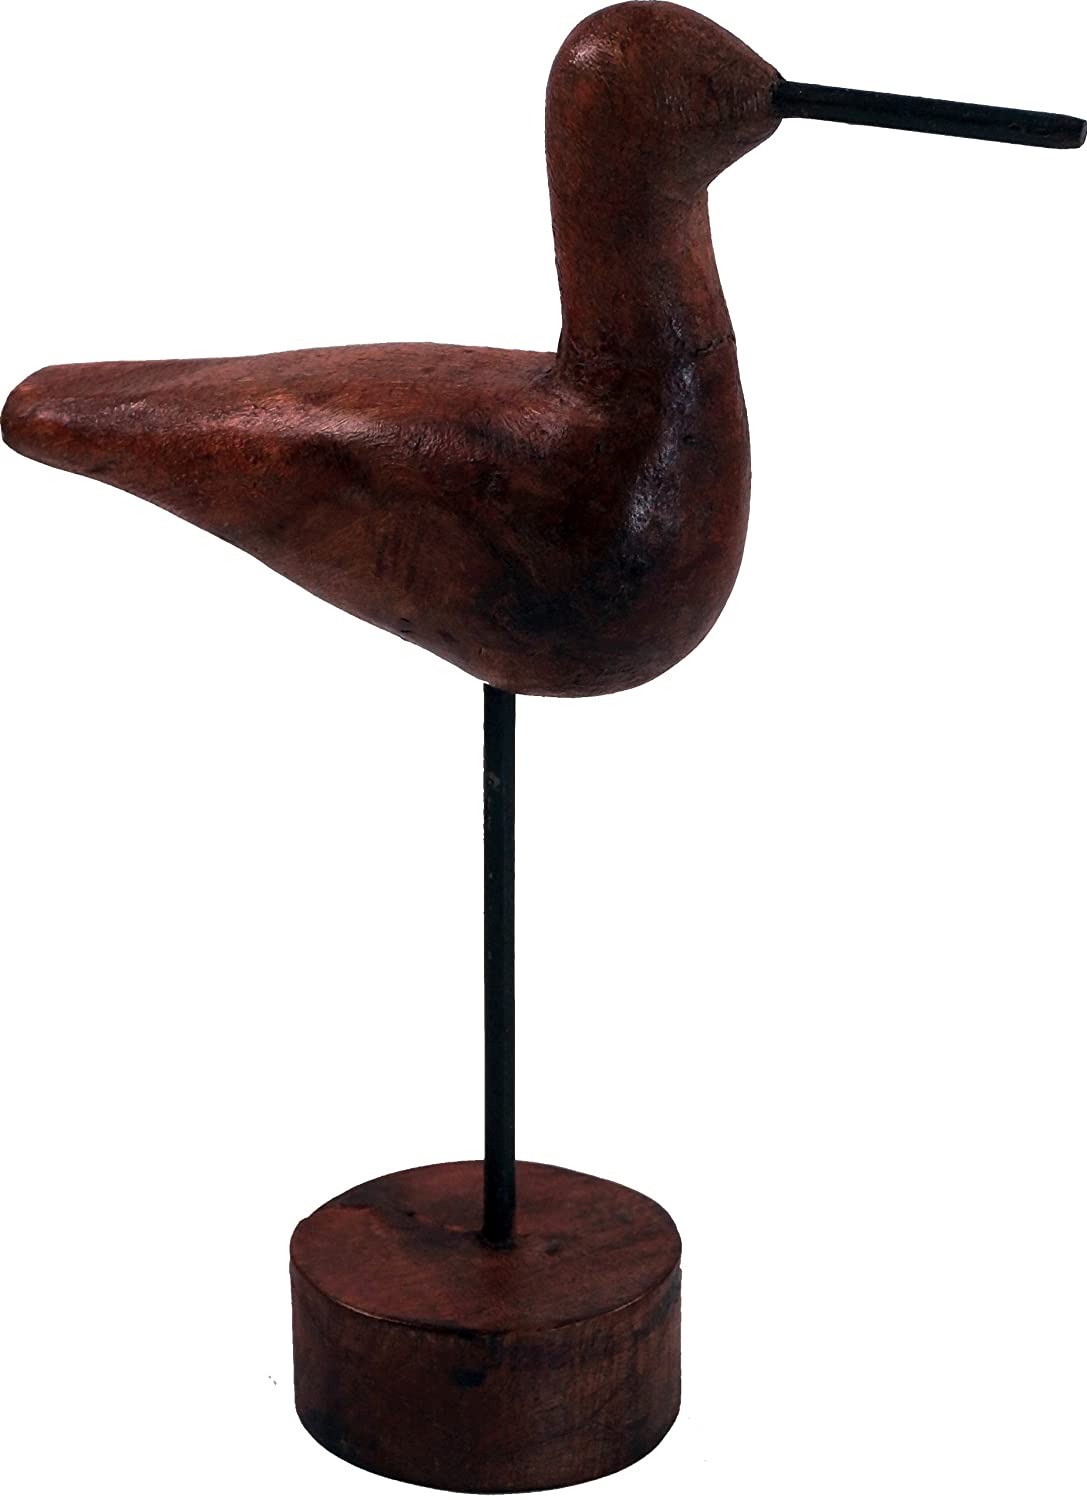 Guru-Shop Wooden Bird Statue, Figurine/Sculpture And Decorative Objects